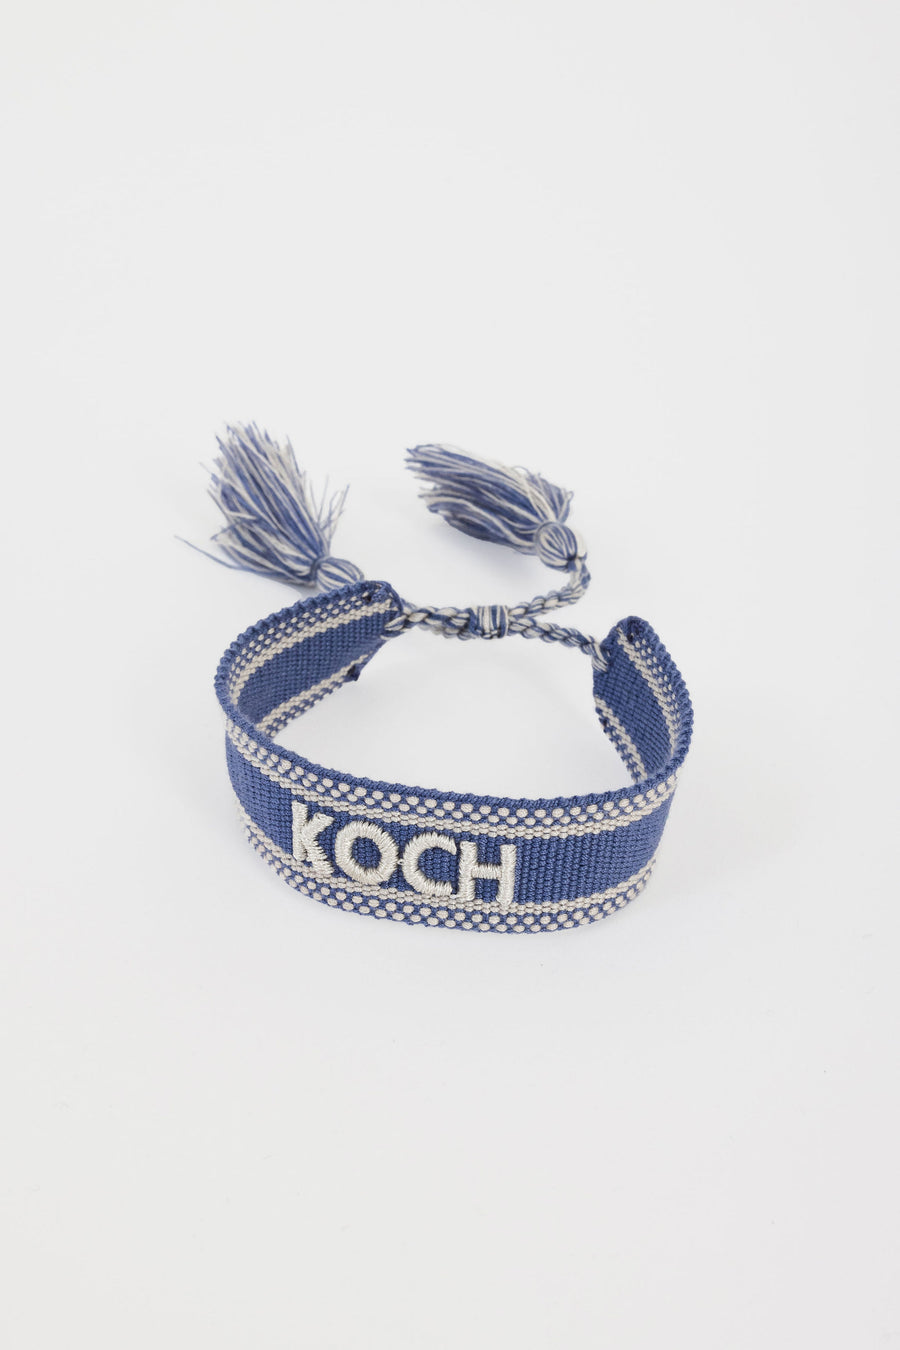 Koch Woven Bracelet *Limited*Edition*